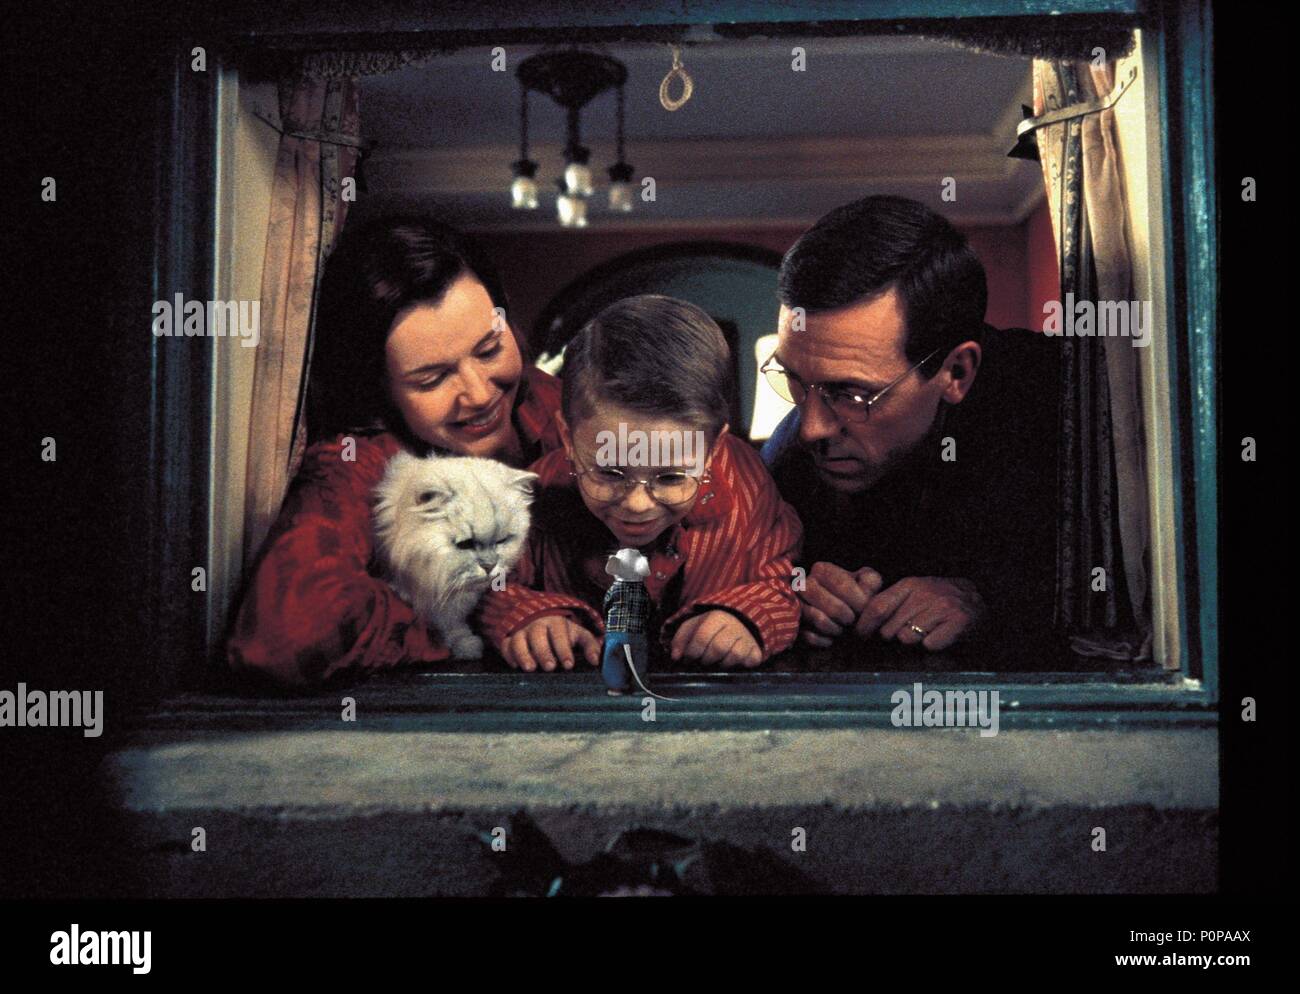 Original Film Title: STUART LITTLE.  English Title: STUART LITTLE.  Film Director: ROB MINKOFF.  Year: 1999. Credit: COLUMBIA PICTURES / Album Stock Photo